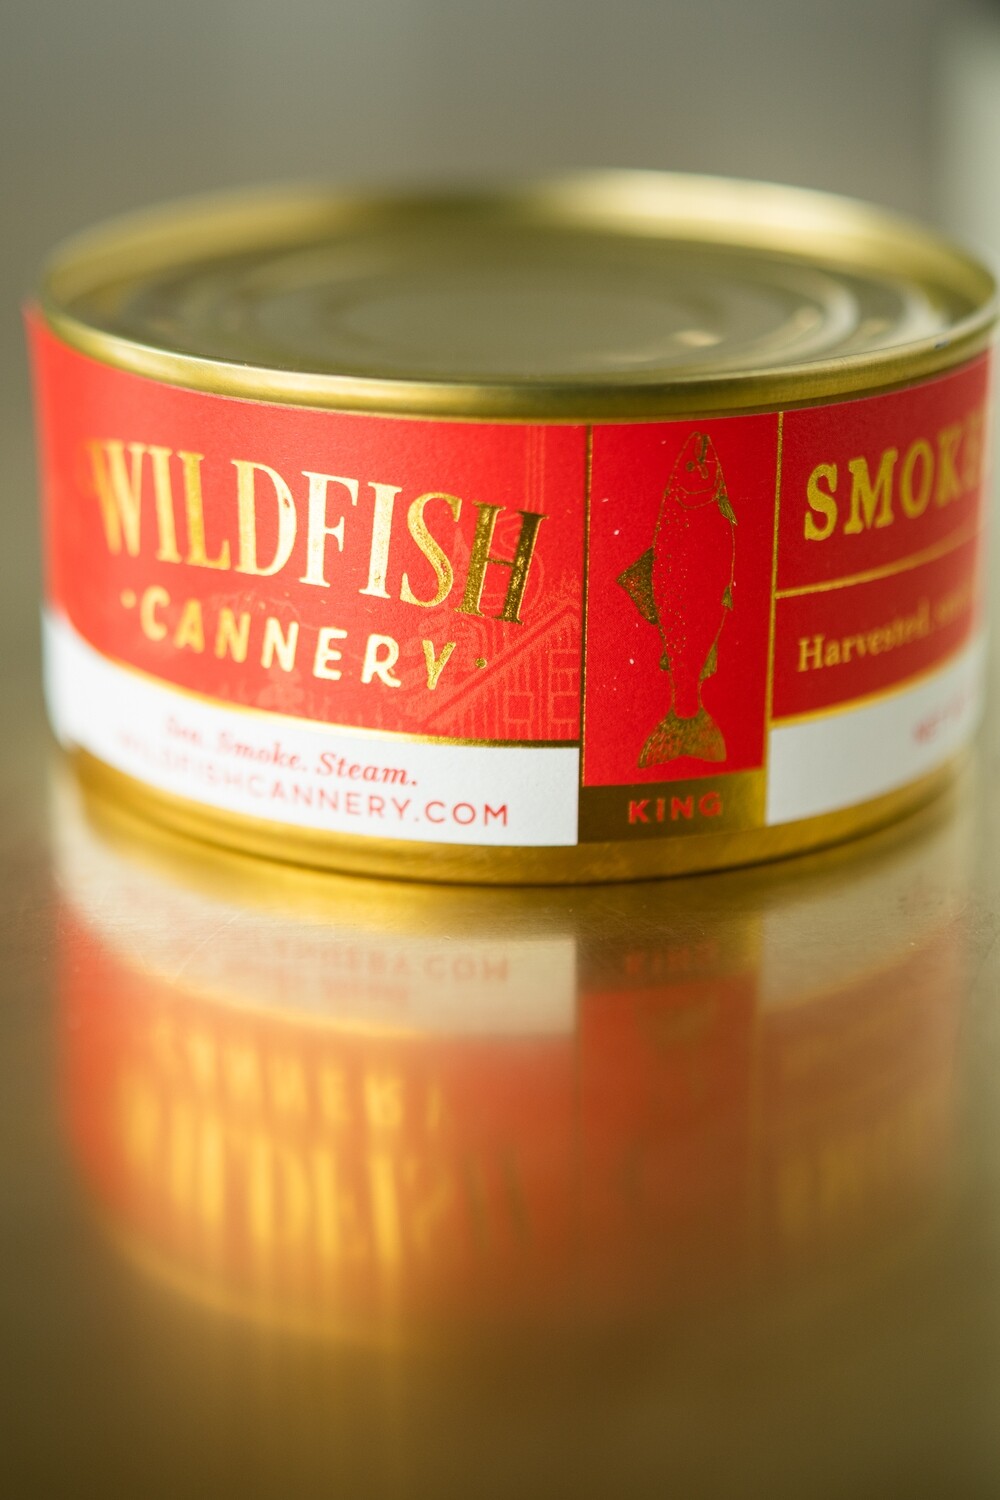 Wildfish Cannery, Smoked King Salmon